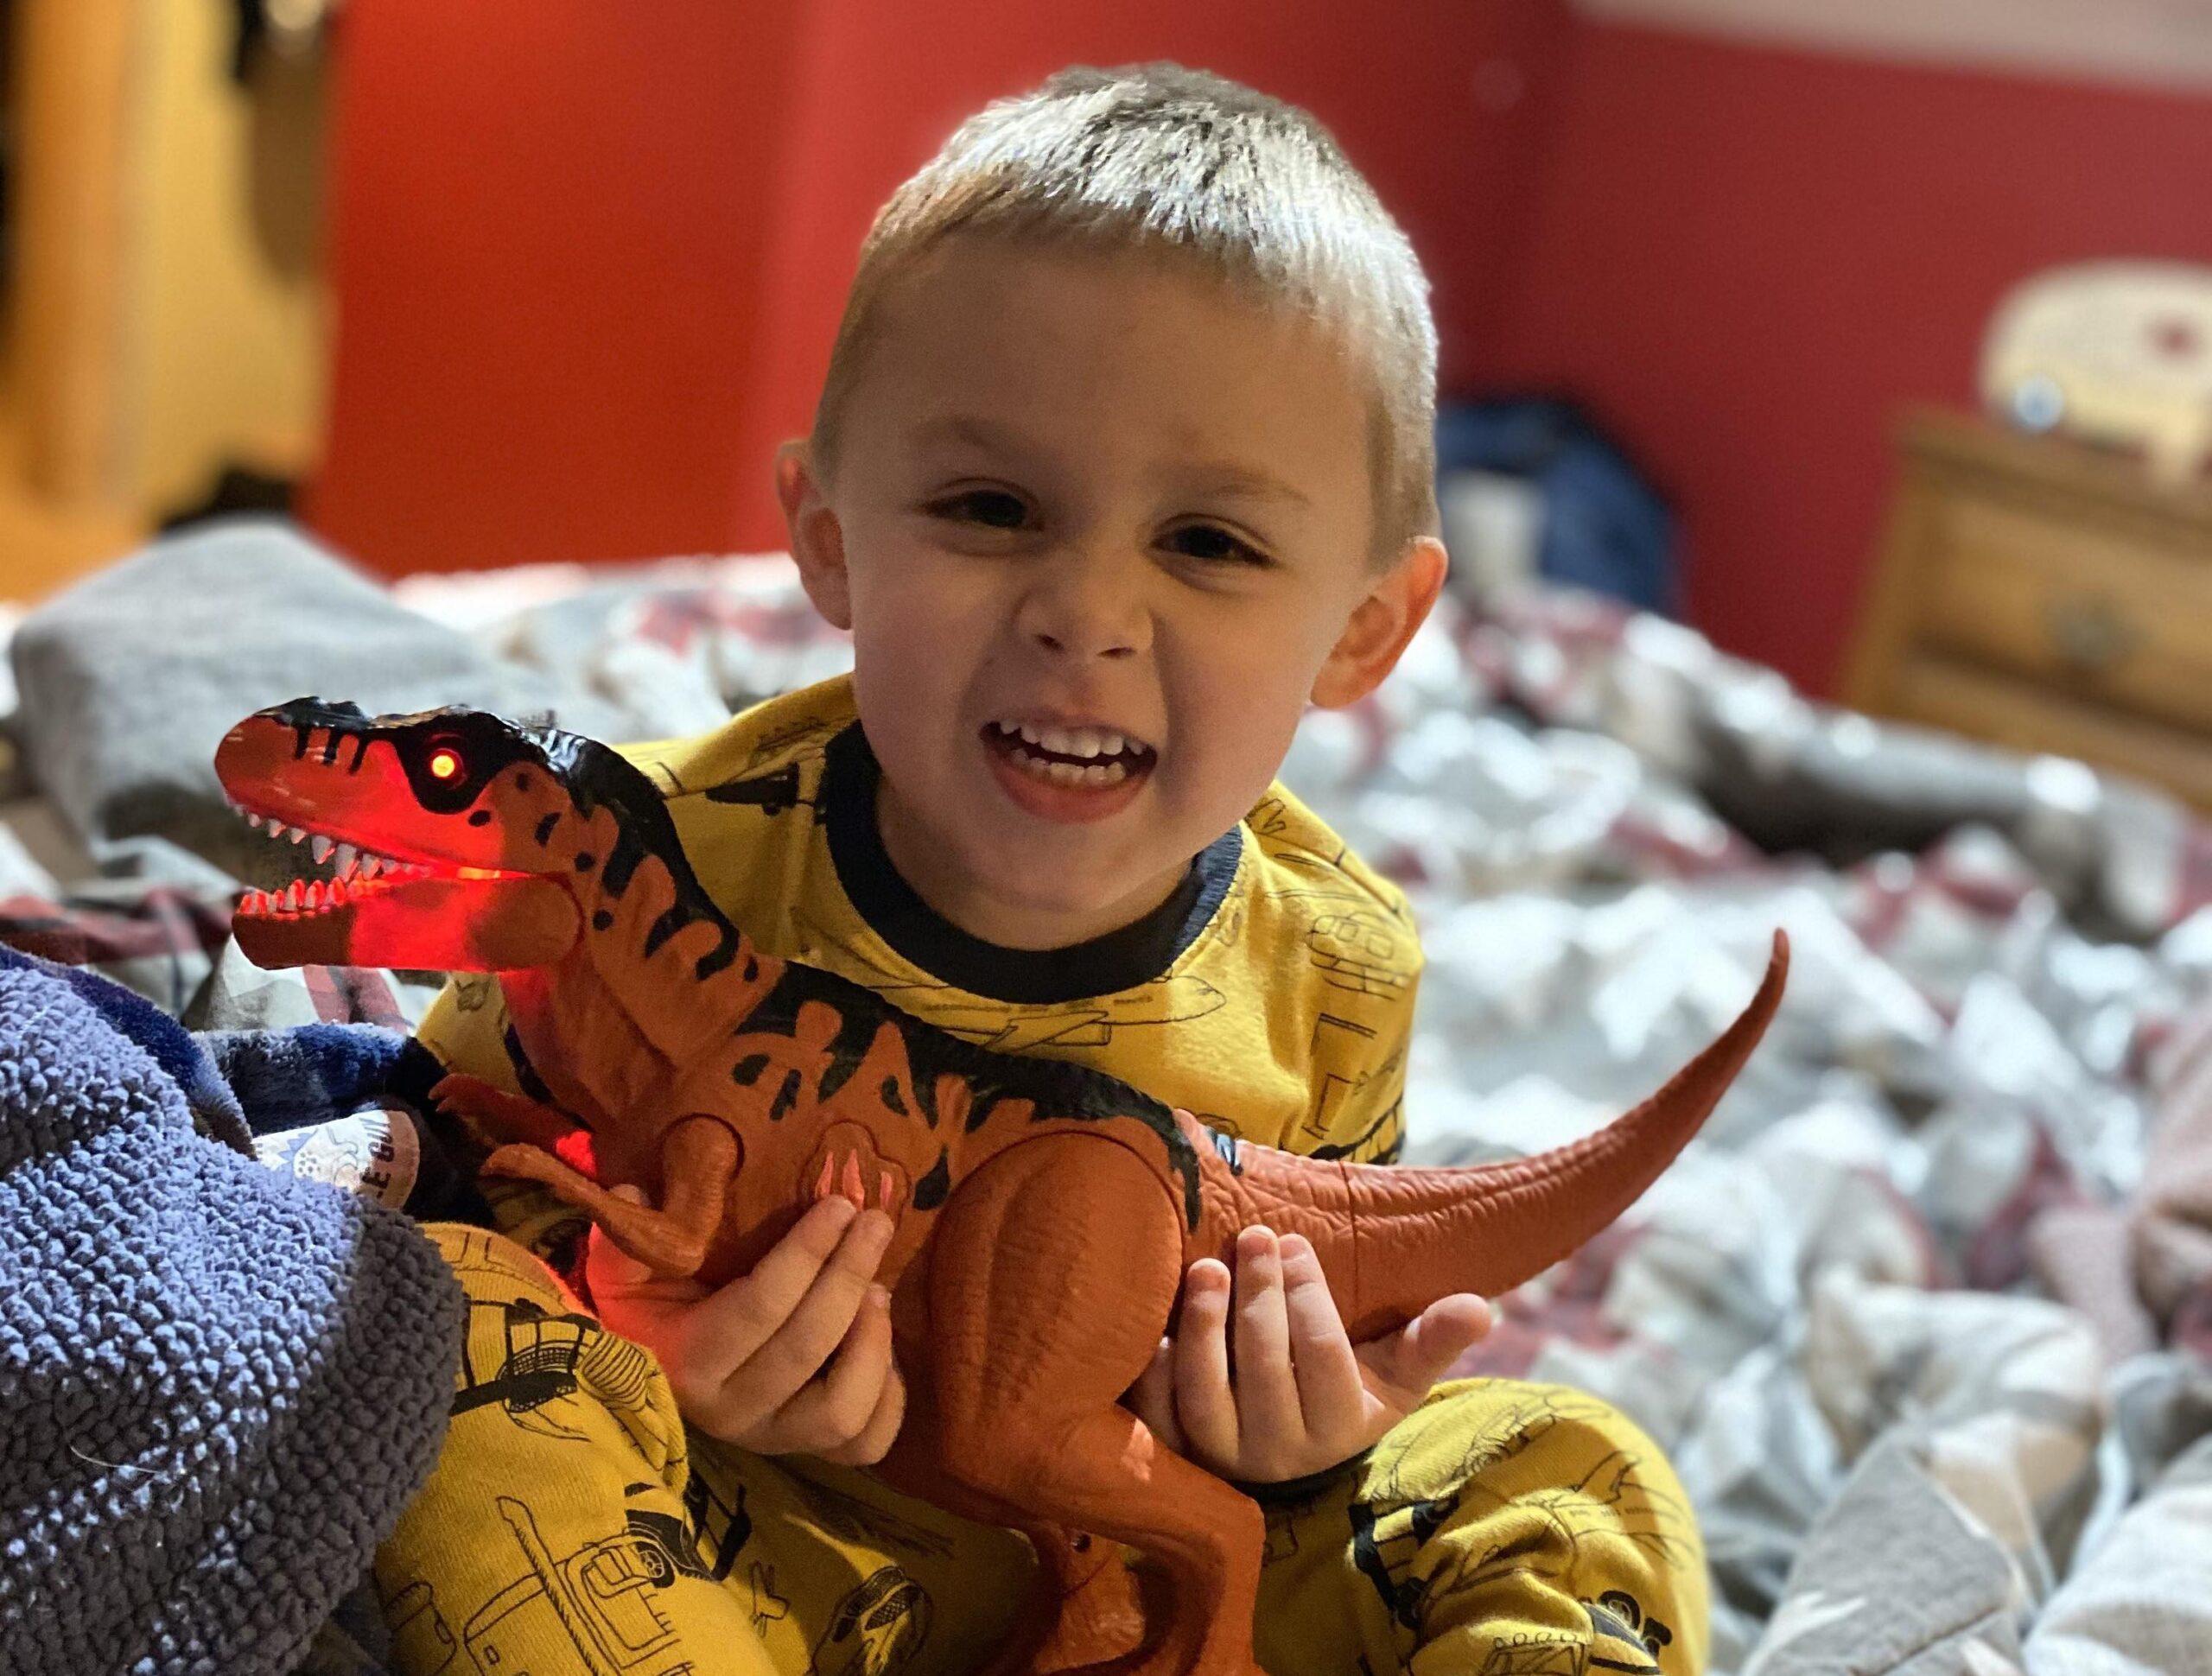 Braxton holding dinosaur